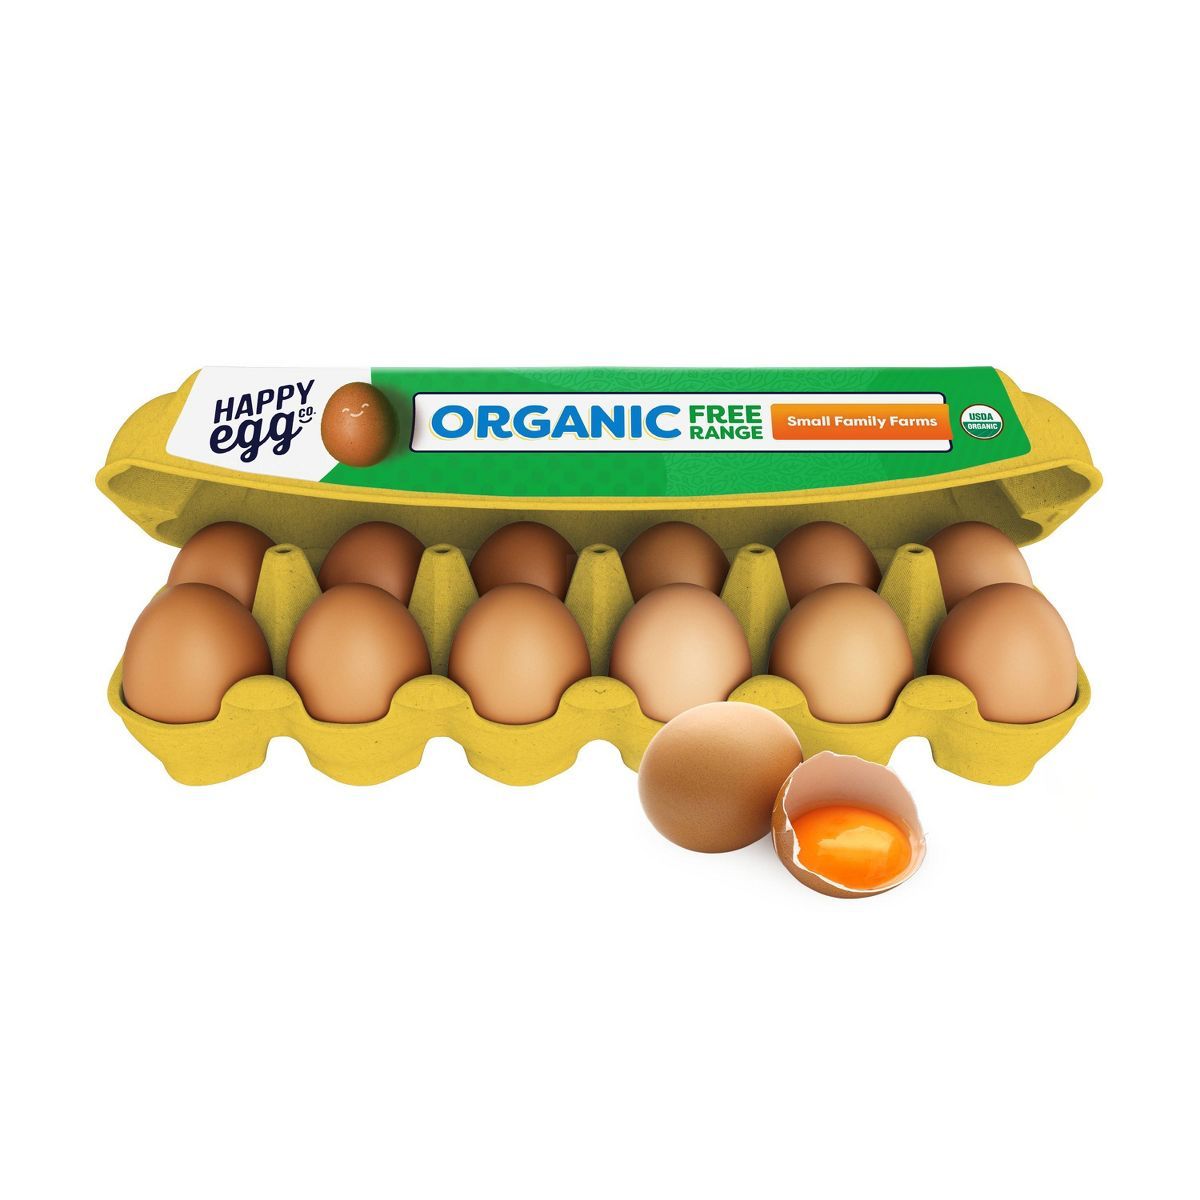 Happy Egg Large Brown Organic Free Range Grade A Eggs - 12ct | Target